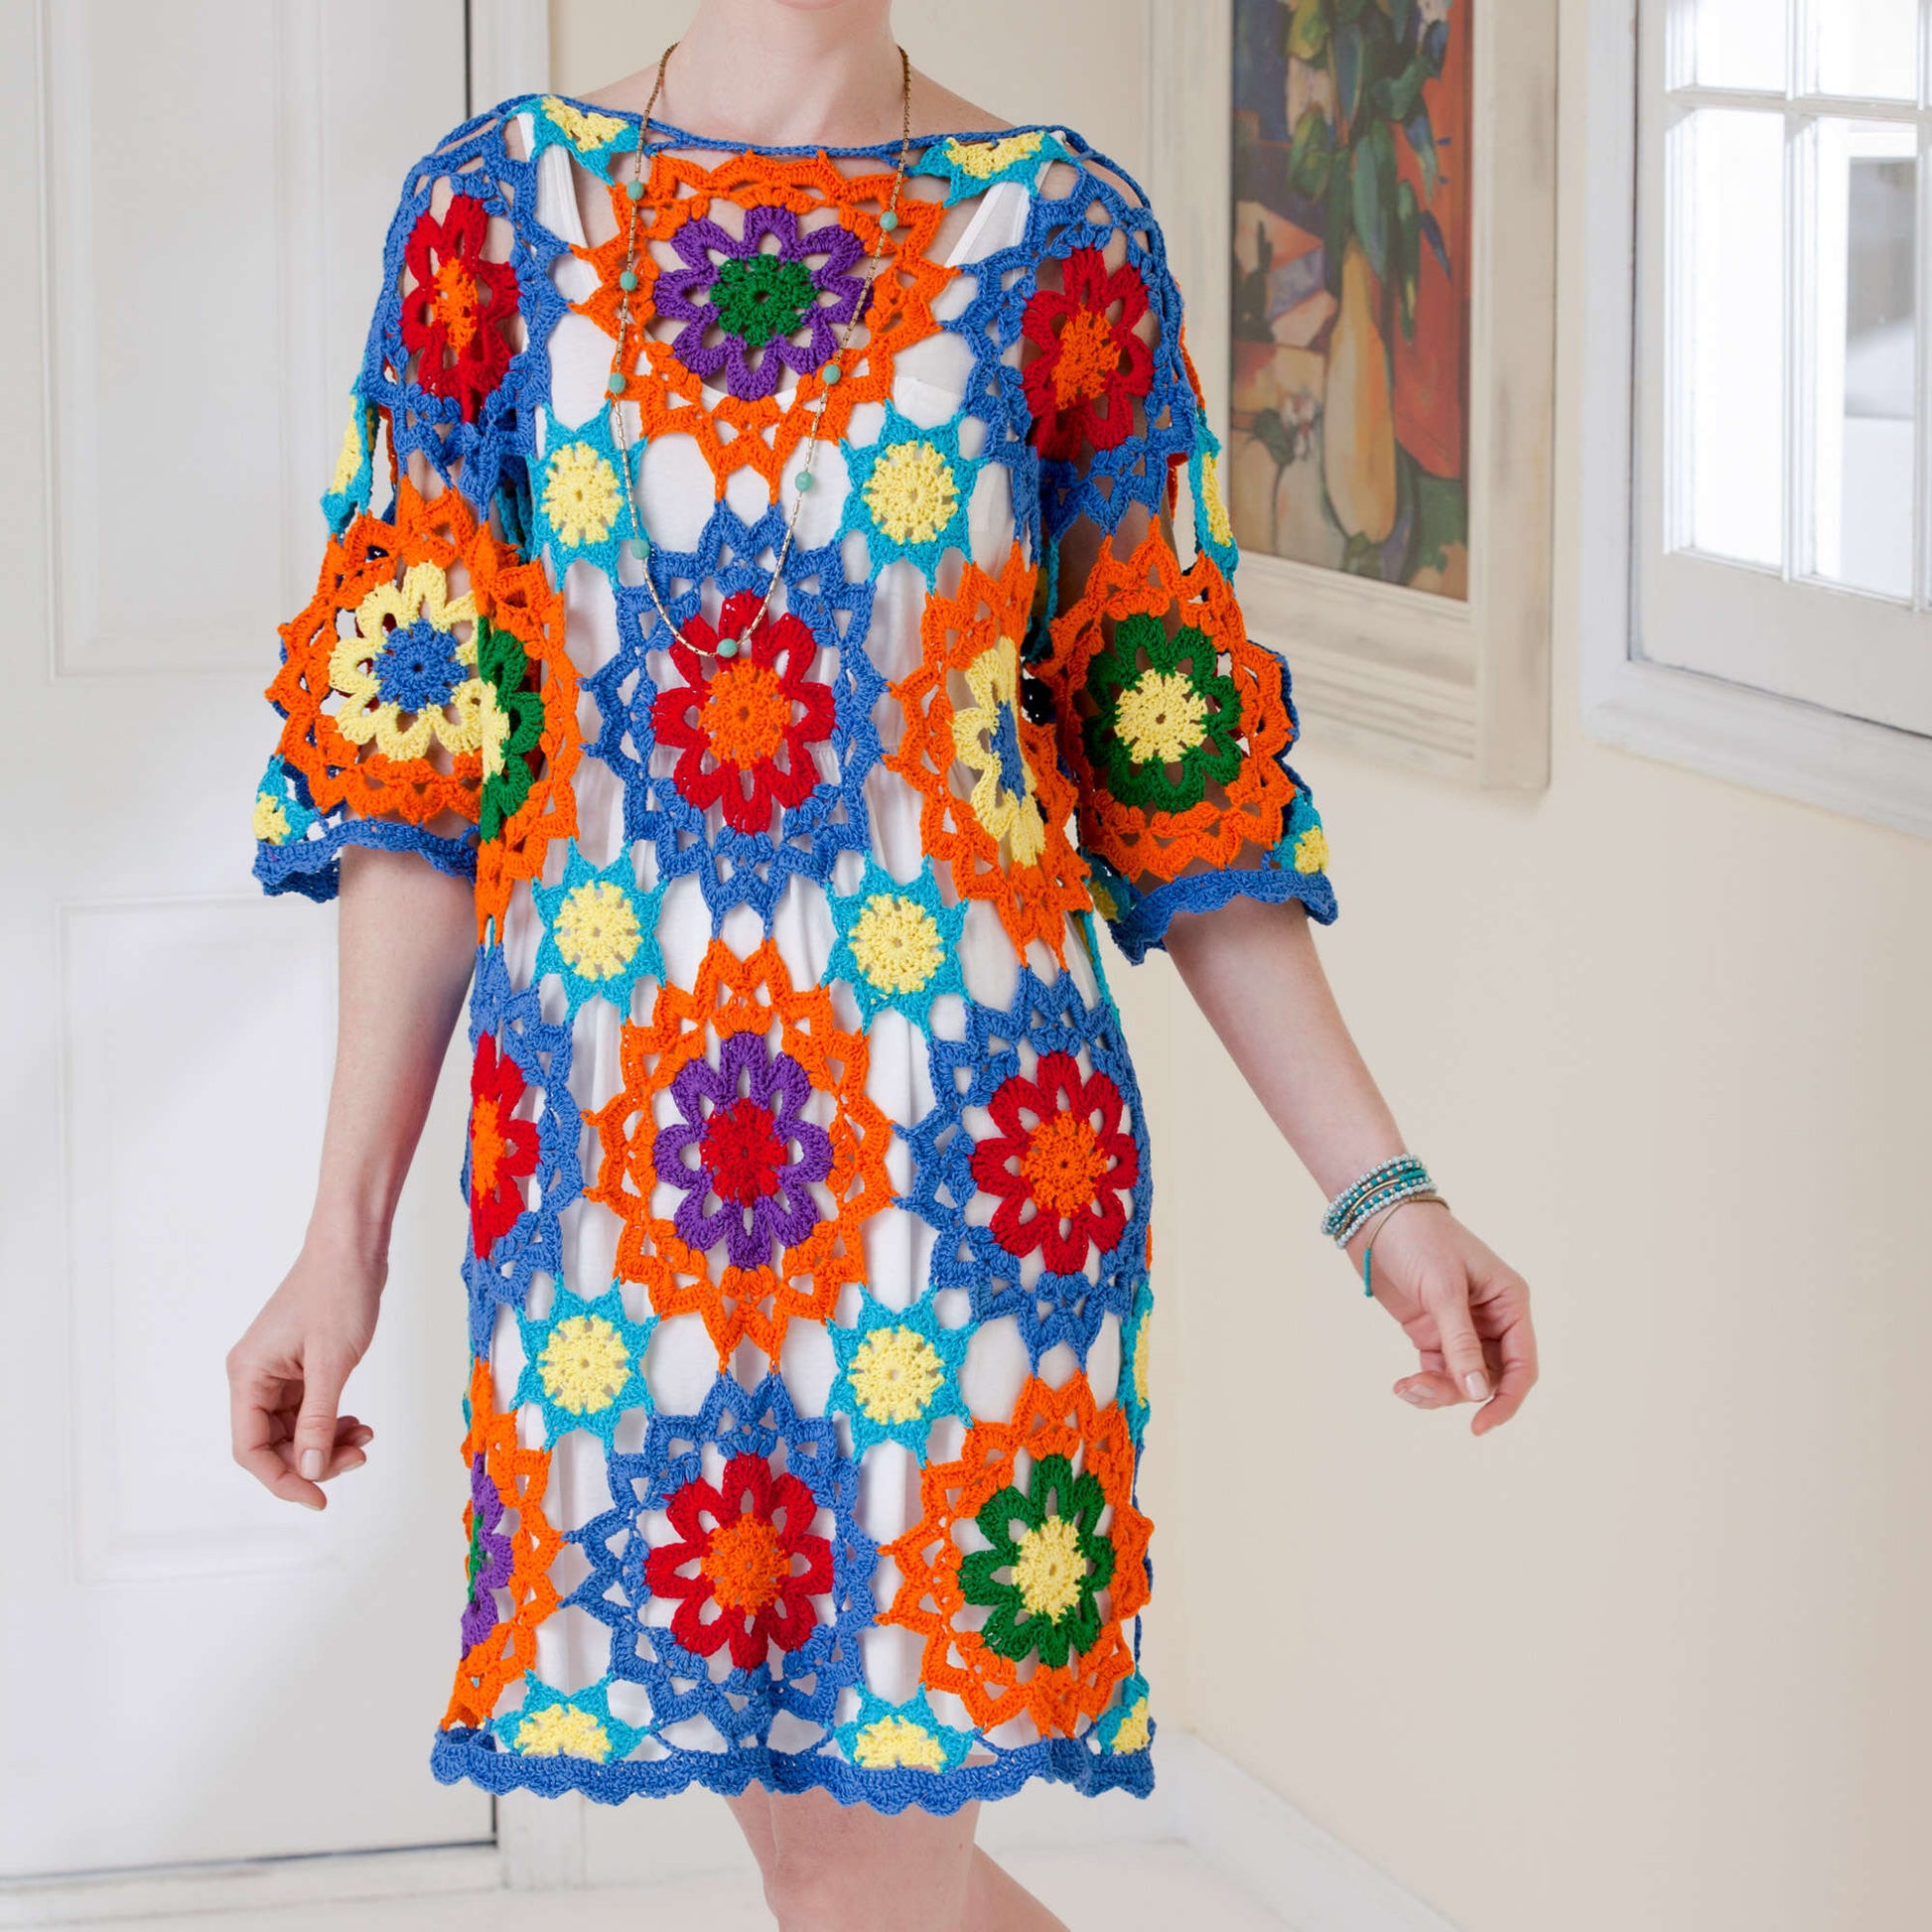 Free Aunt Lydia's Crochet Bright & Beautiful Top Pattern